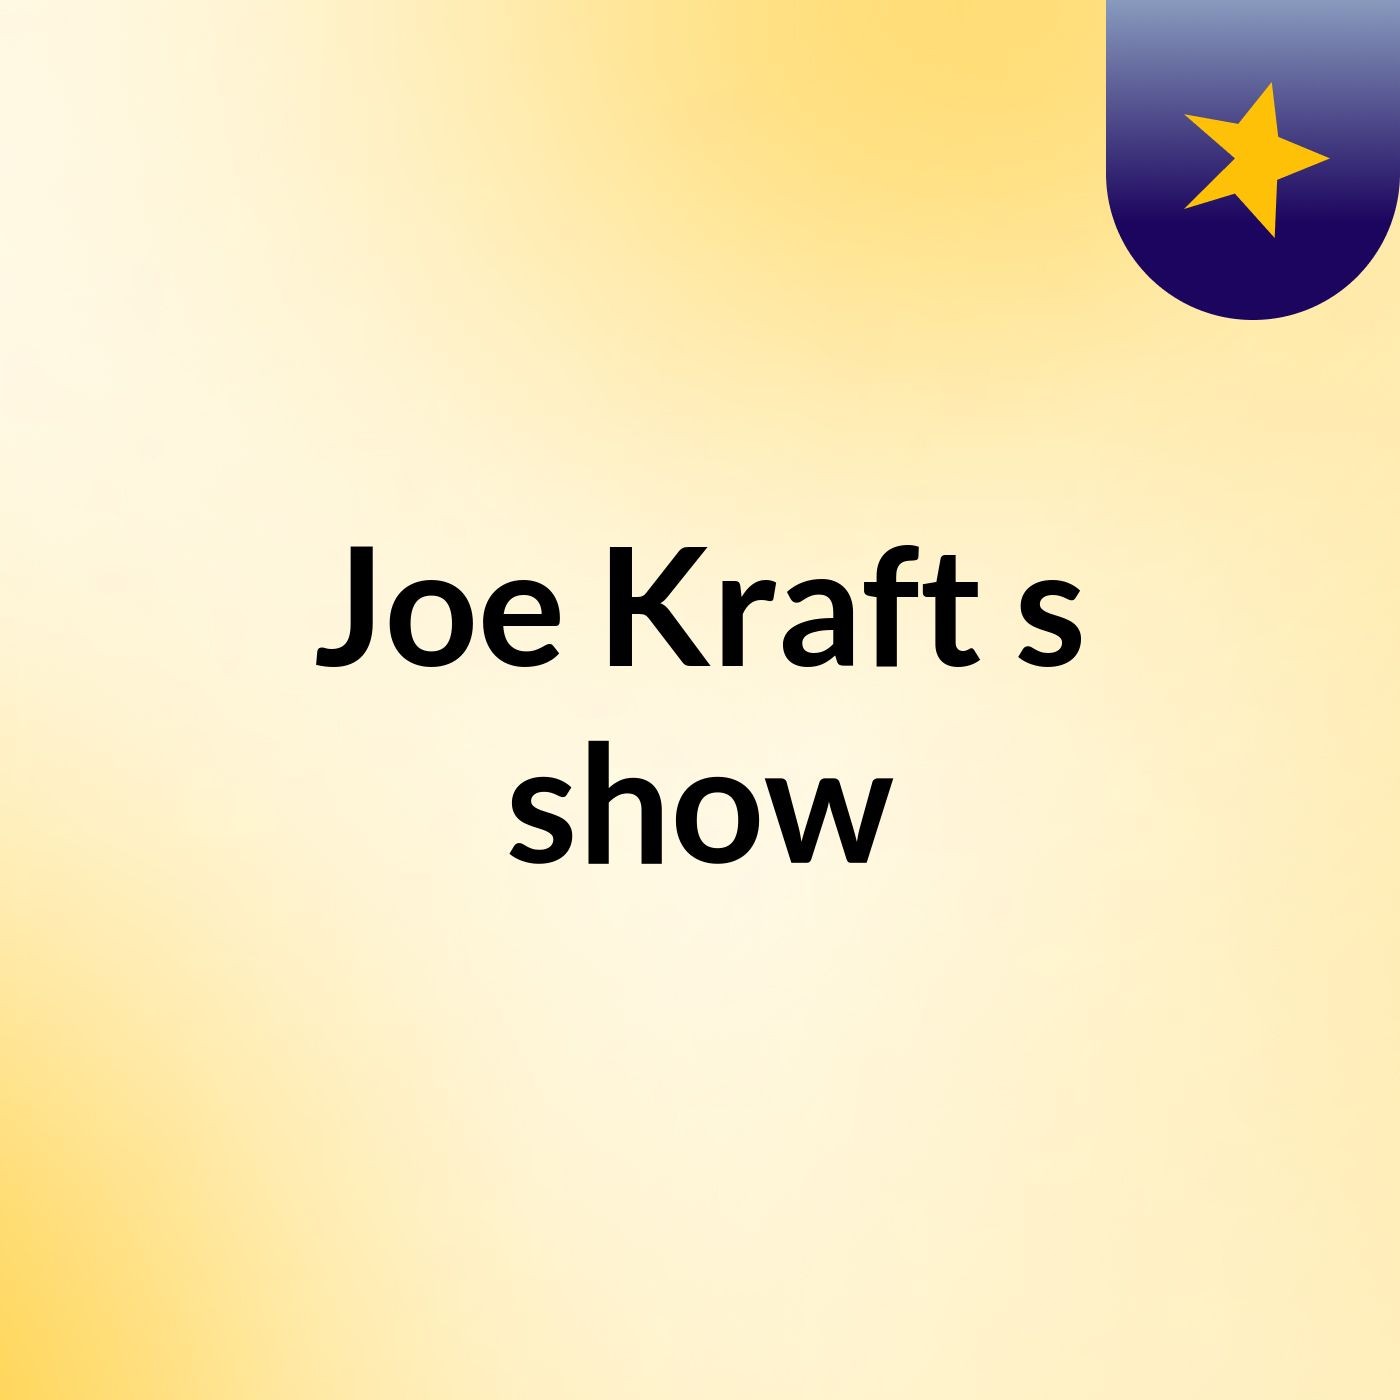 Joe Kraft's show